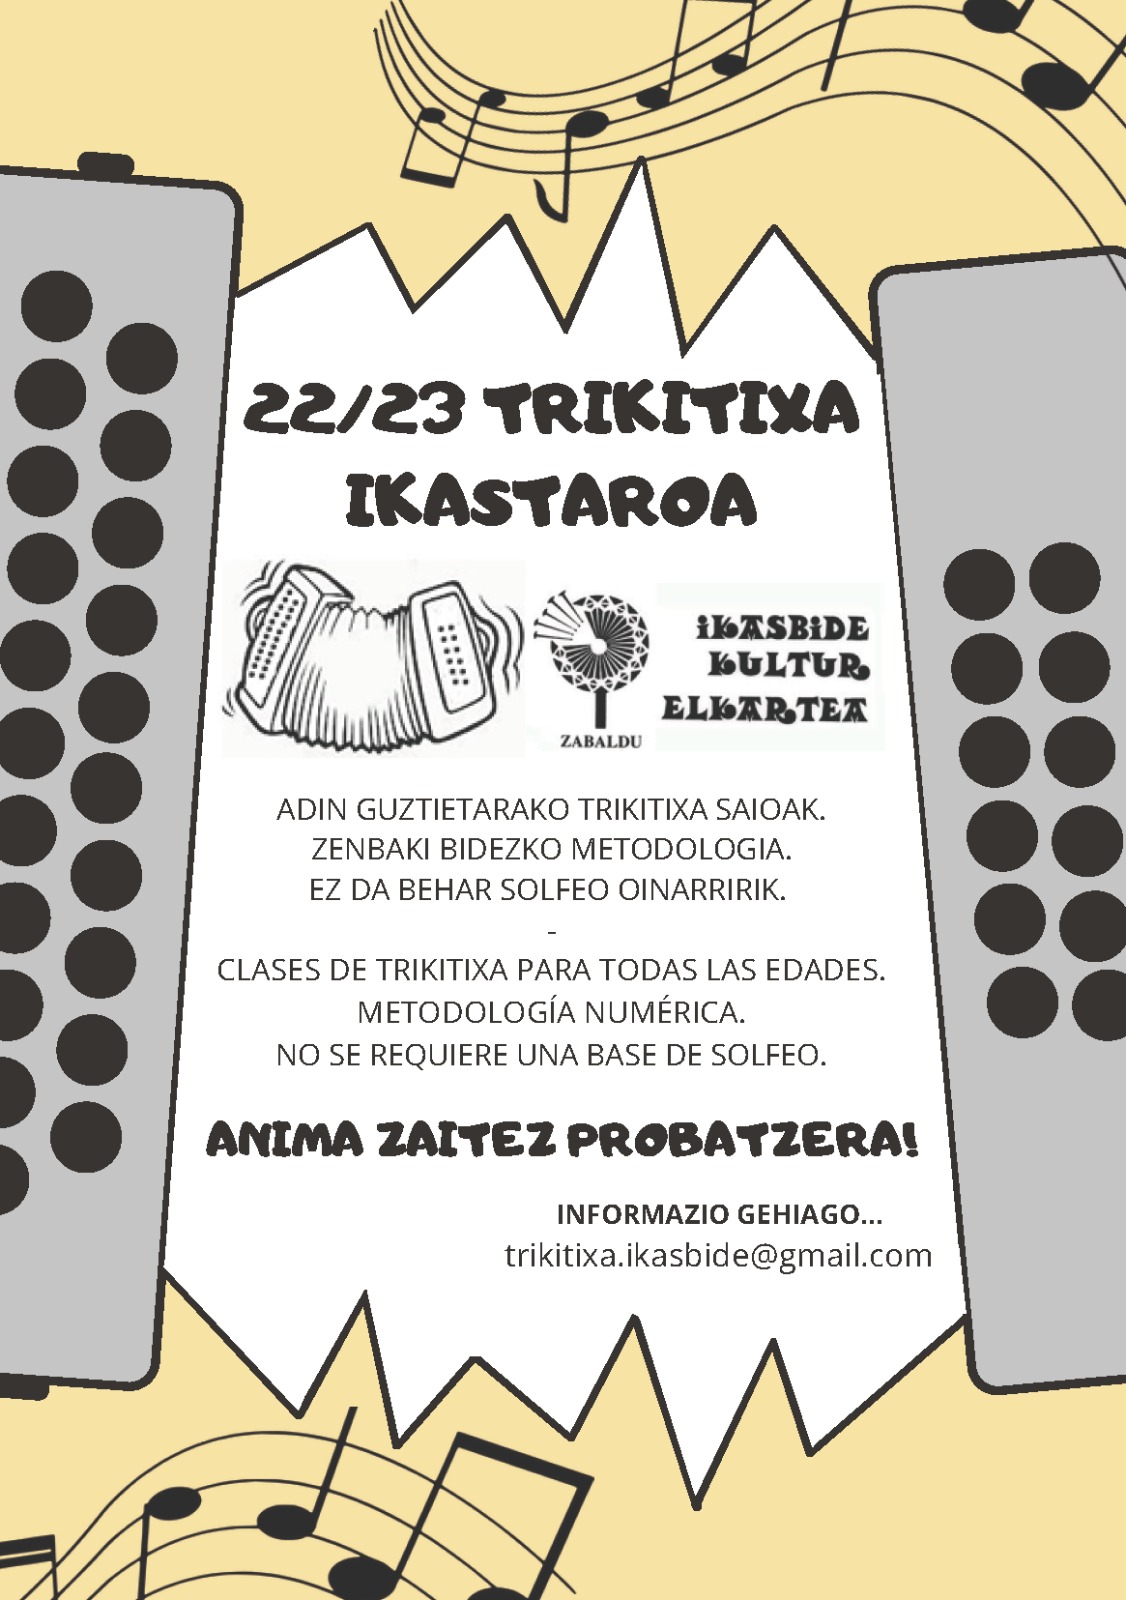 IKE Trikitrixa 2022 2023